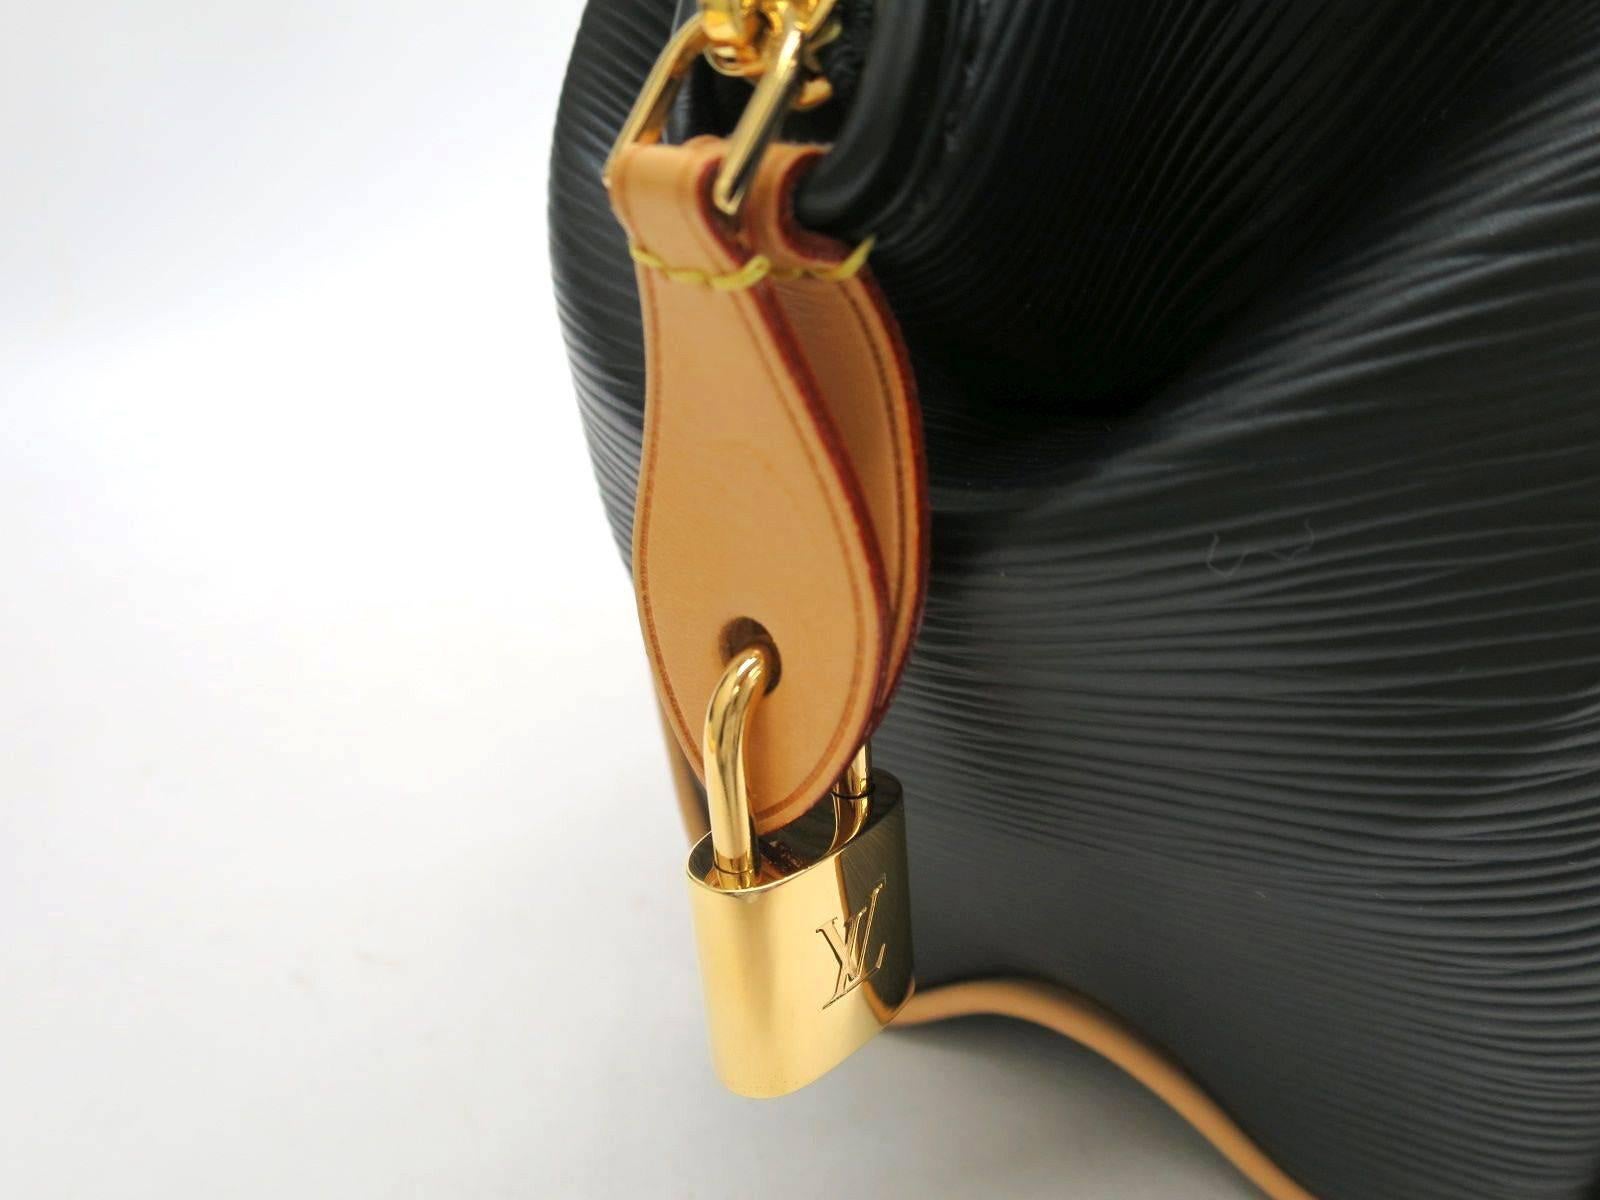 CURATOR'S NOTES

Louis Vuitton Limited Edition Black Leather Tan Top Handle Satchel Shoulder Bag  

Epi leather
Gold hardware
Made in France 
Handle 9.5"
Measures 8.7" W x 6.7" H x 4.7" D 
Adjustable / Removable shoulder strap